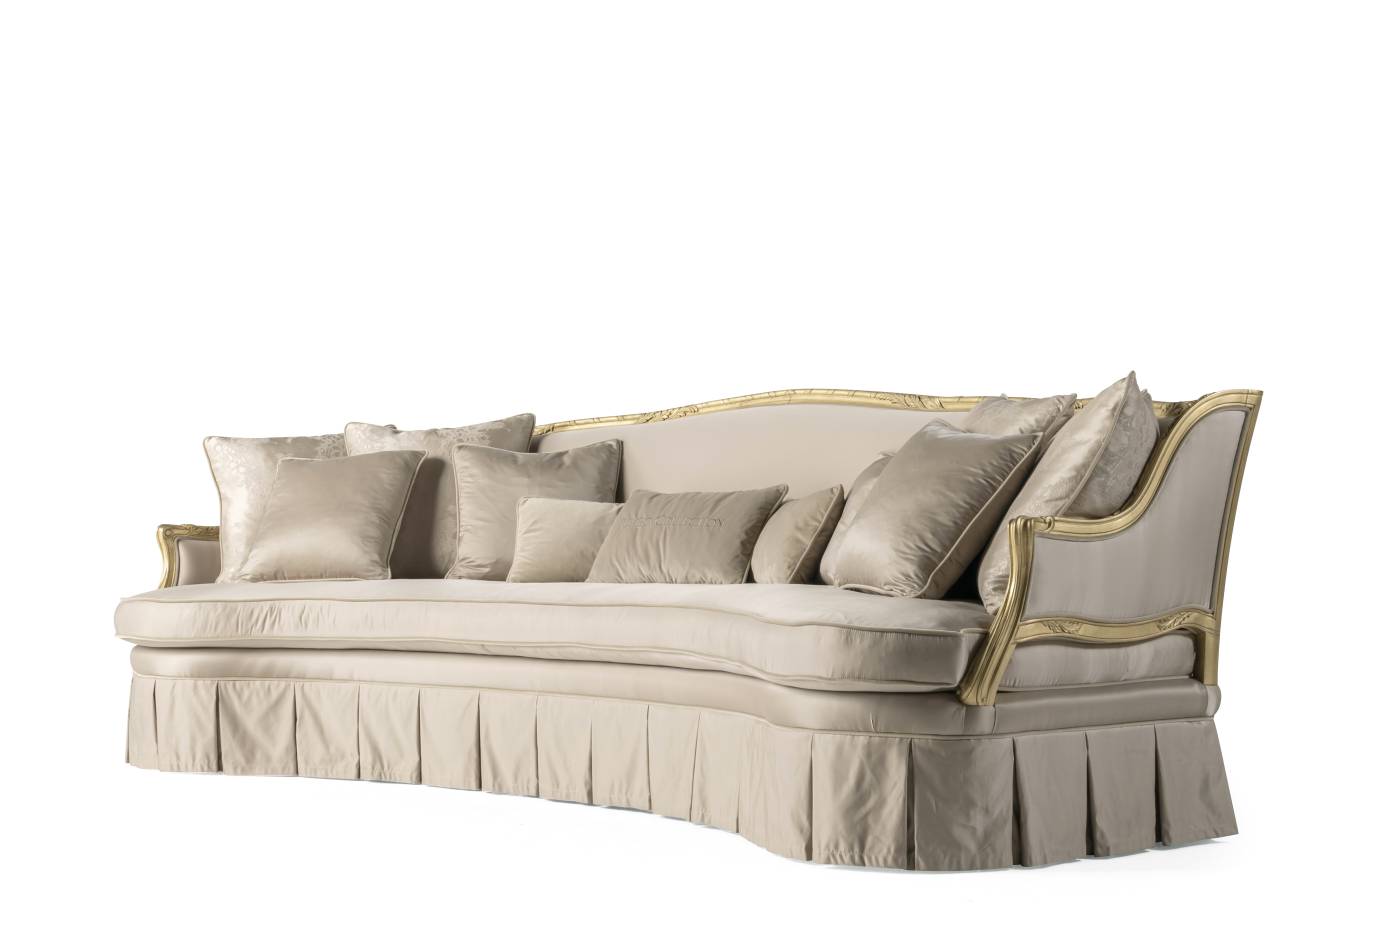 EGLANTINE 3-seater sofa - Discover timeless elegance with Jumbo Collection's Italian luxury sofas. 